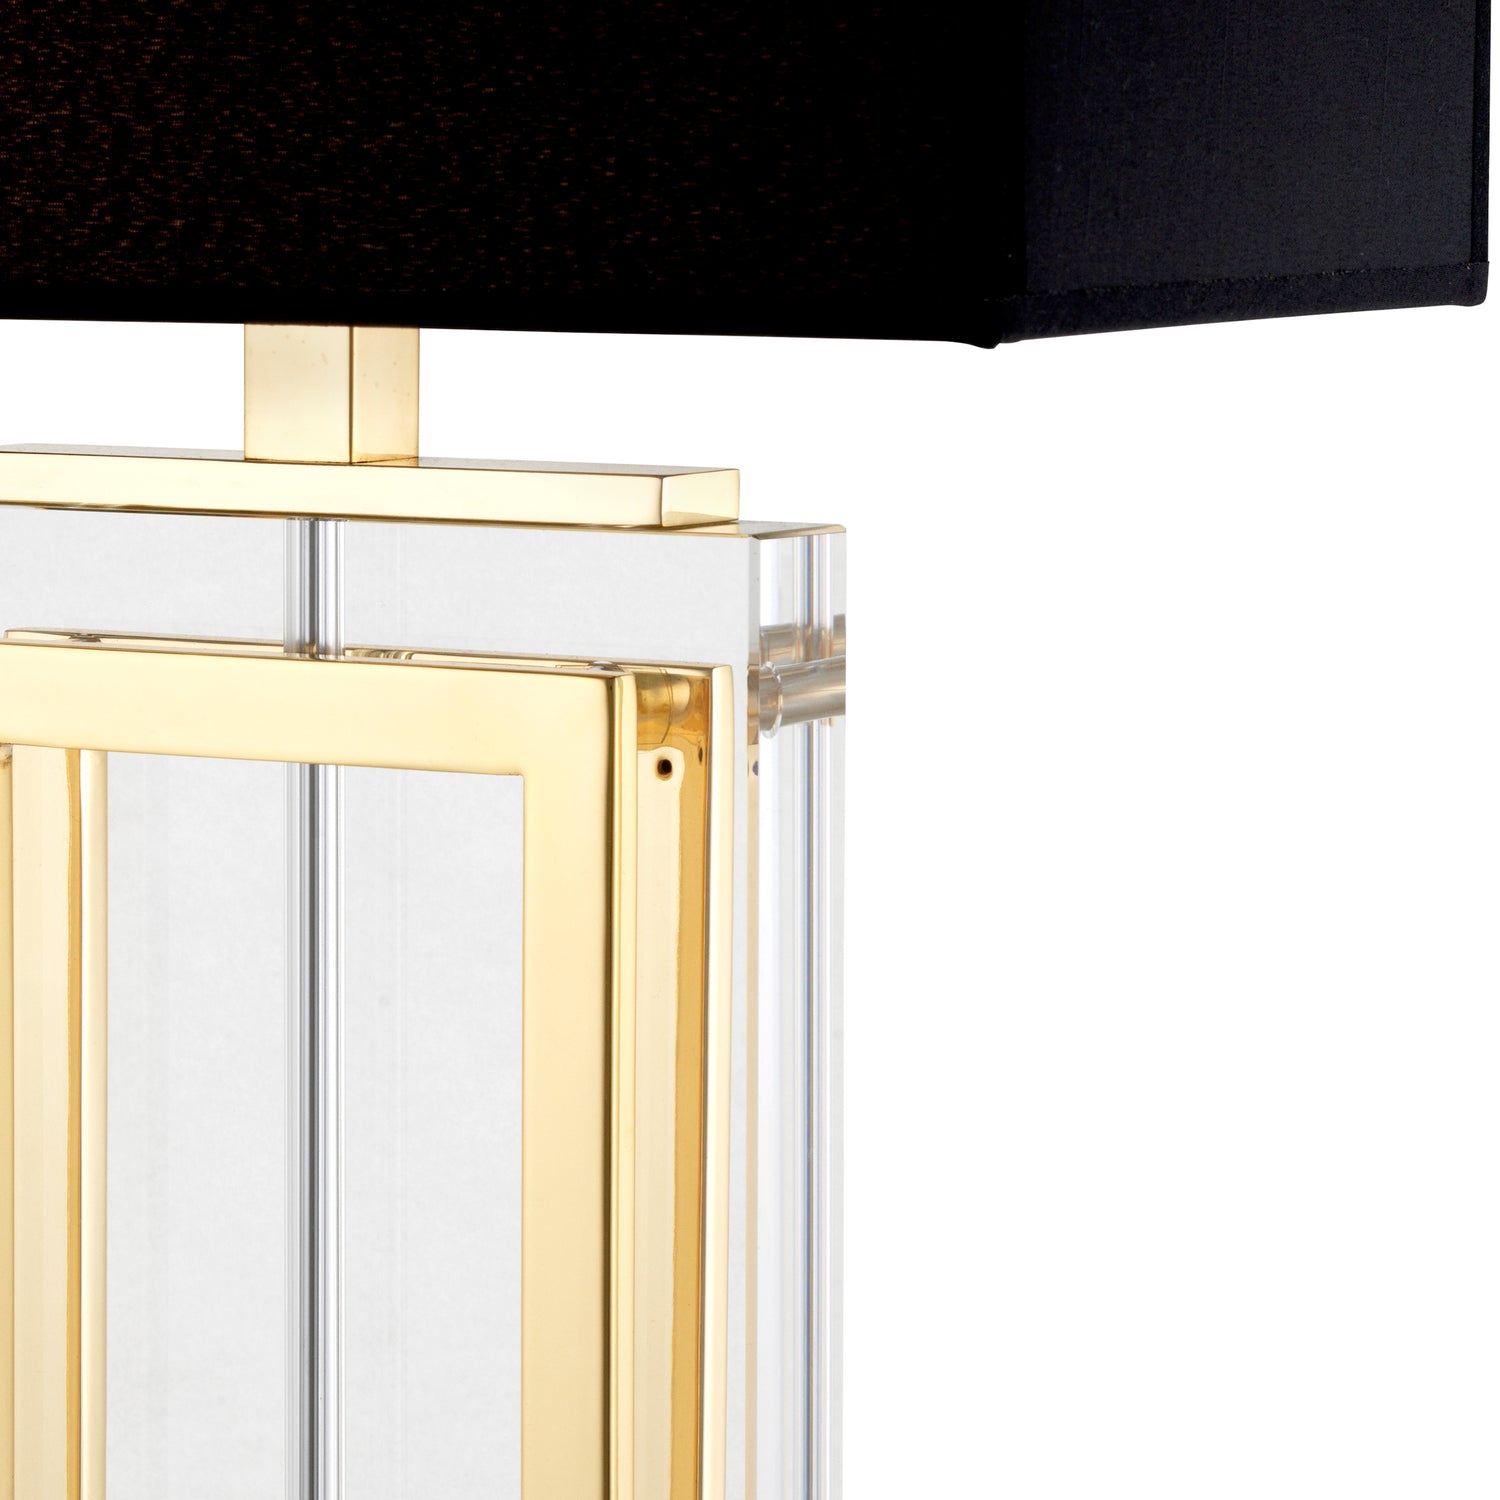 Table Lamp Arlington Crystal